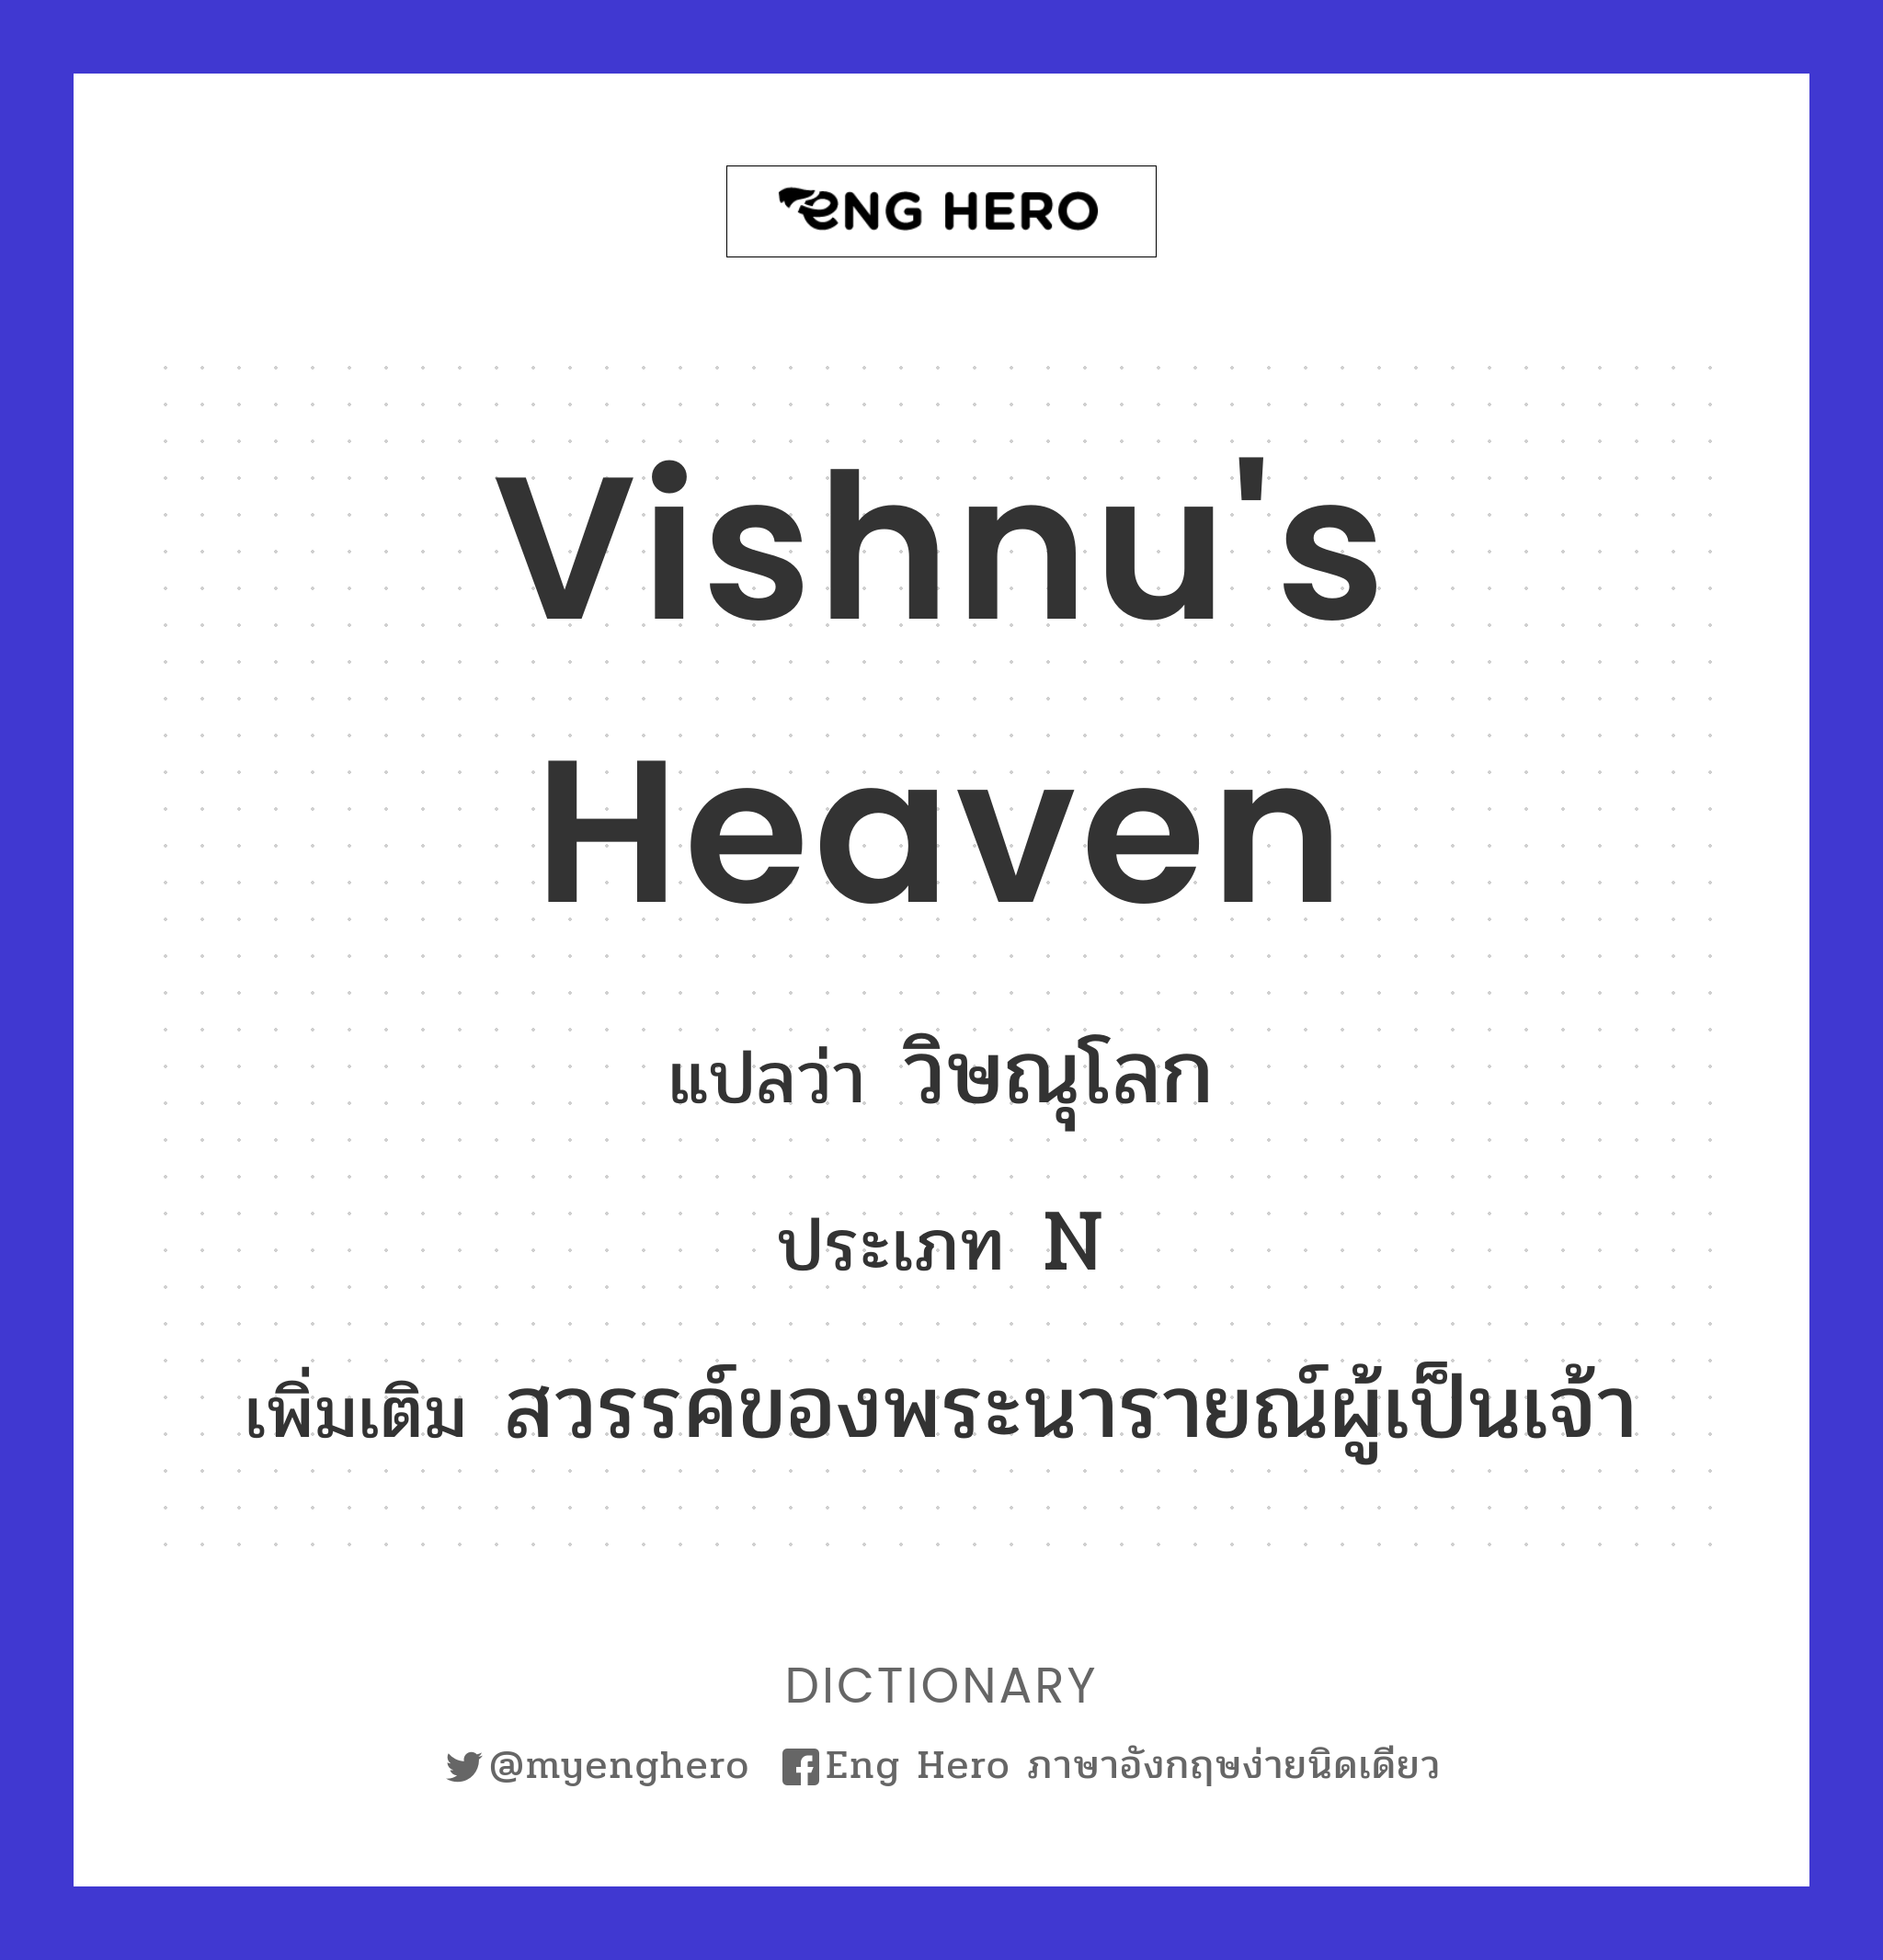 Vishnu's heaven